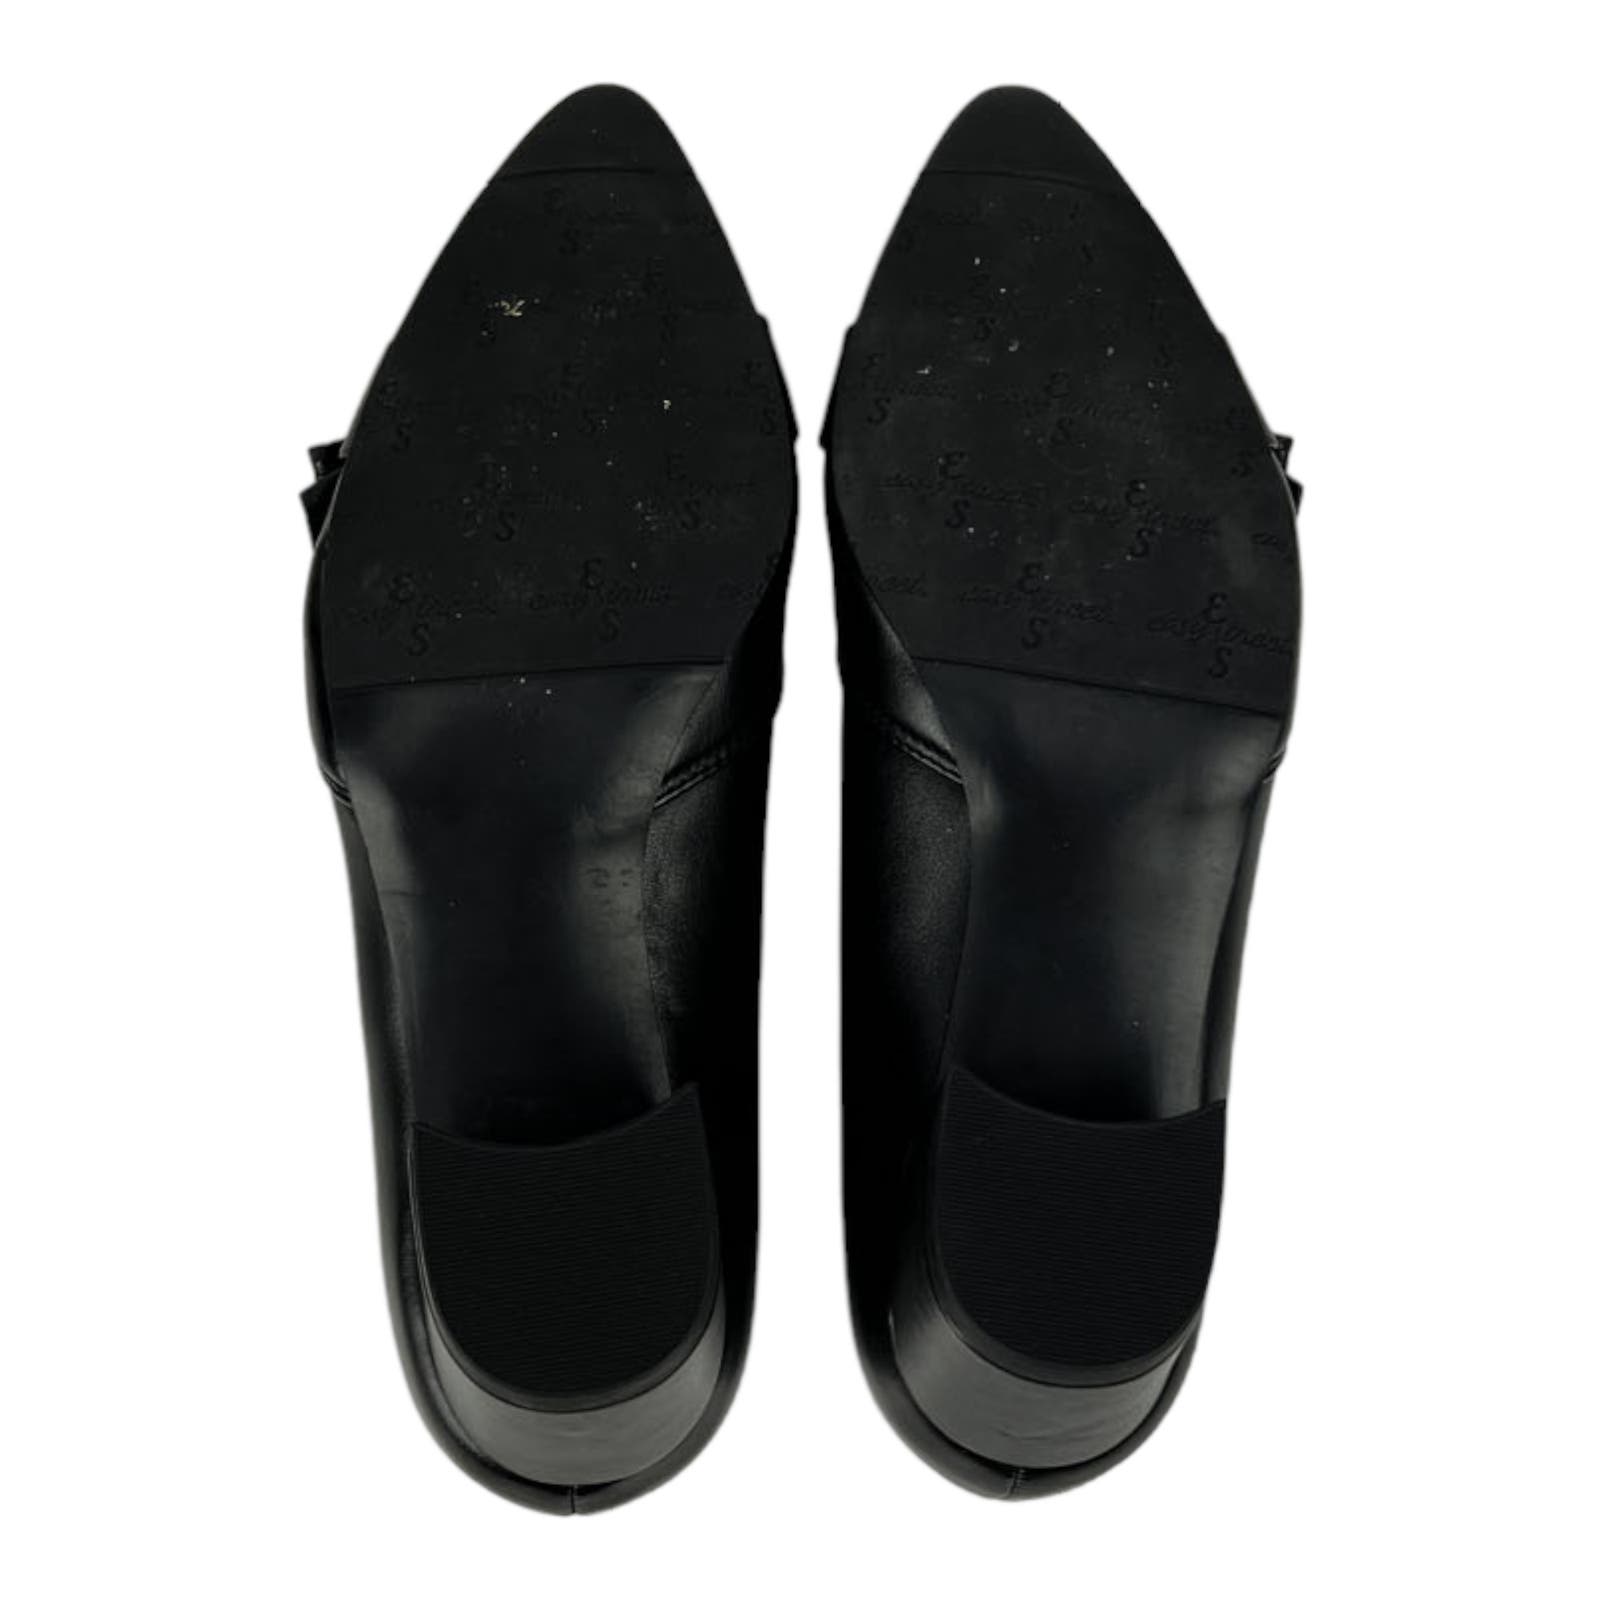 Easy Street Women US 6.5 Black Shoes Pointed toe Slip-on